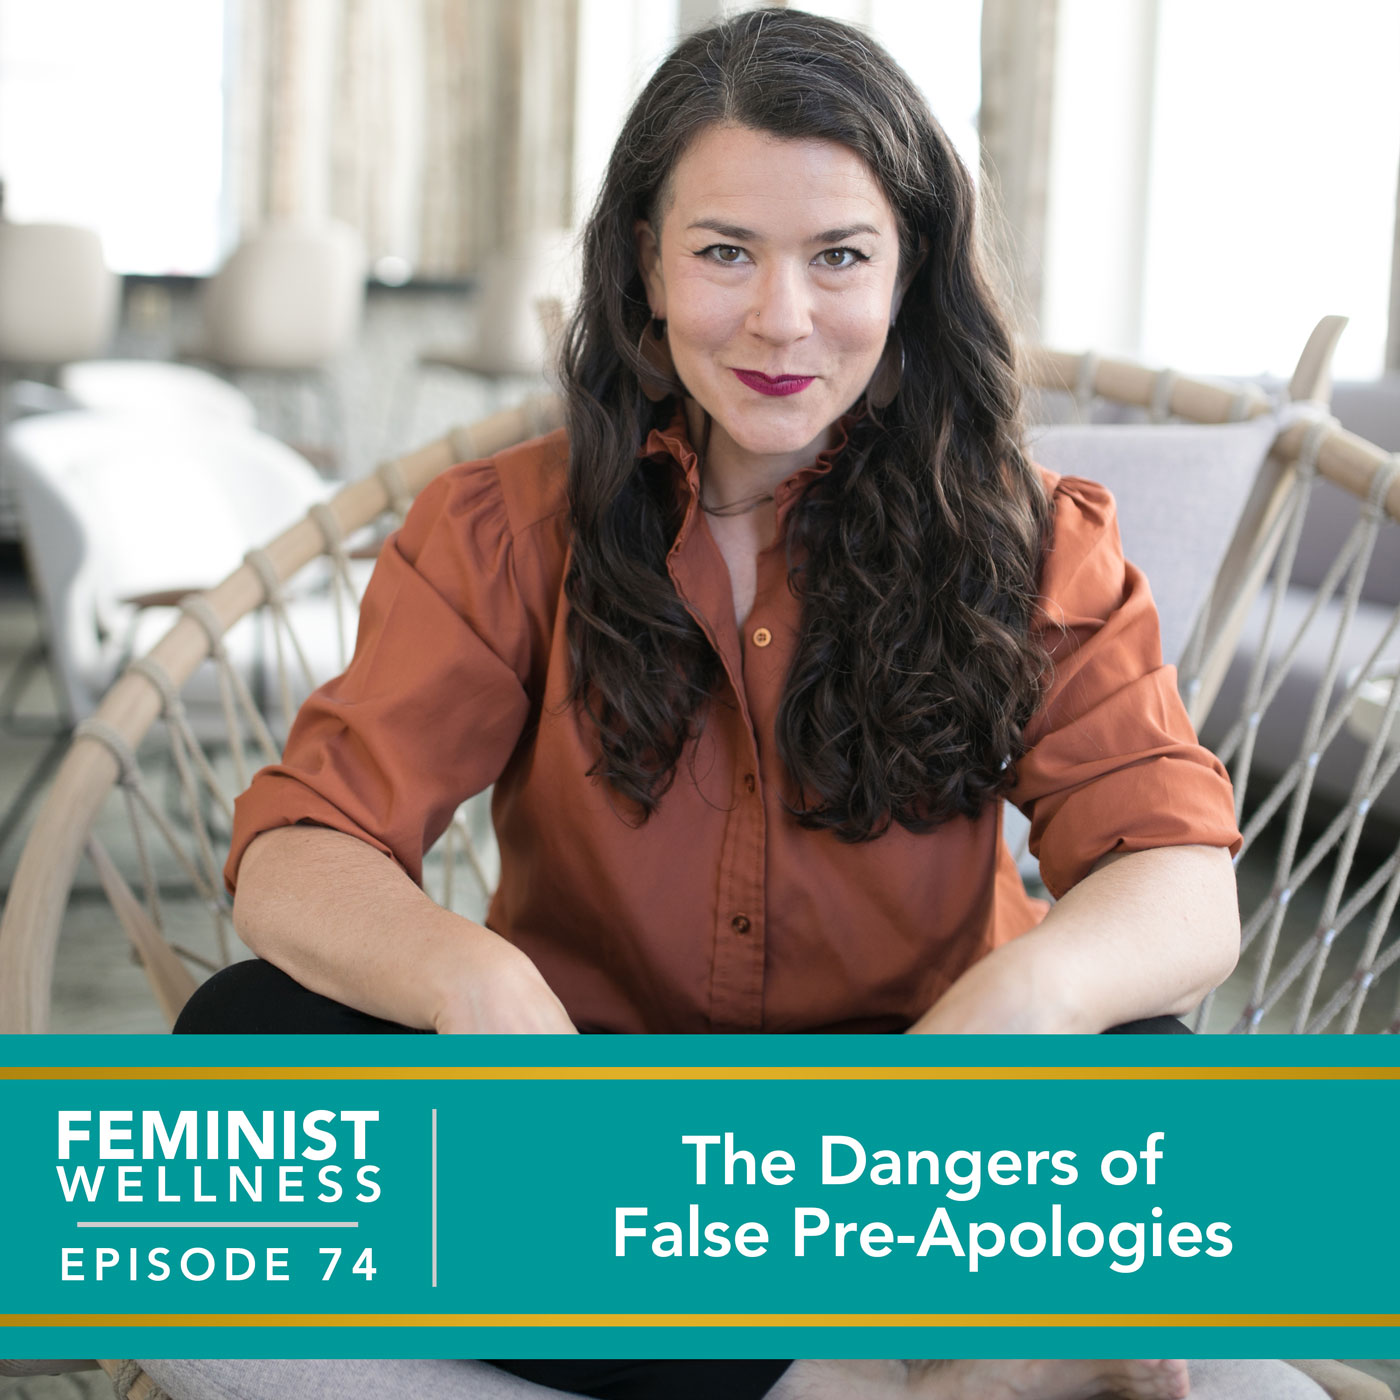 The Dangers of False Pre-Apologies